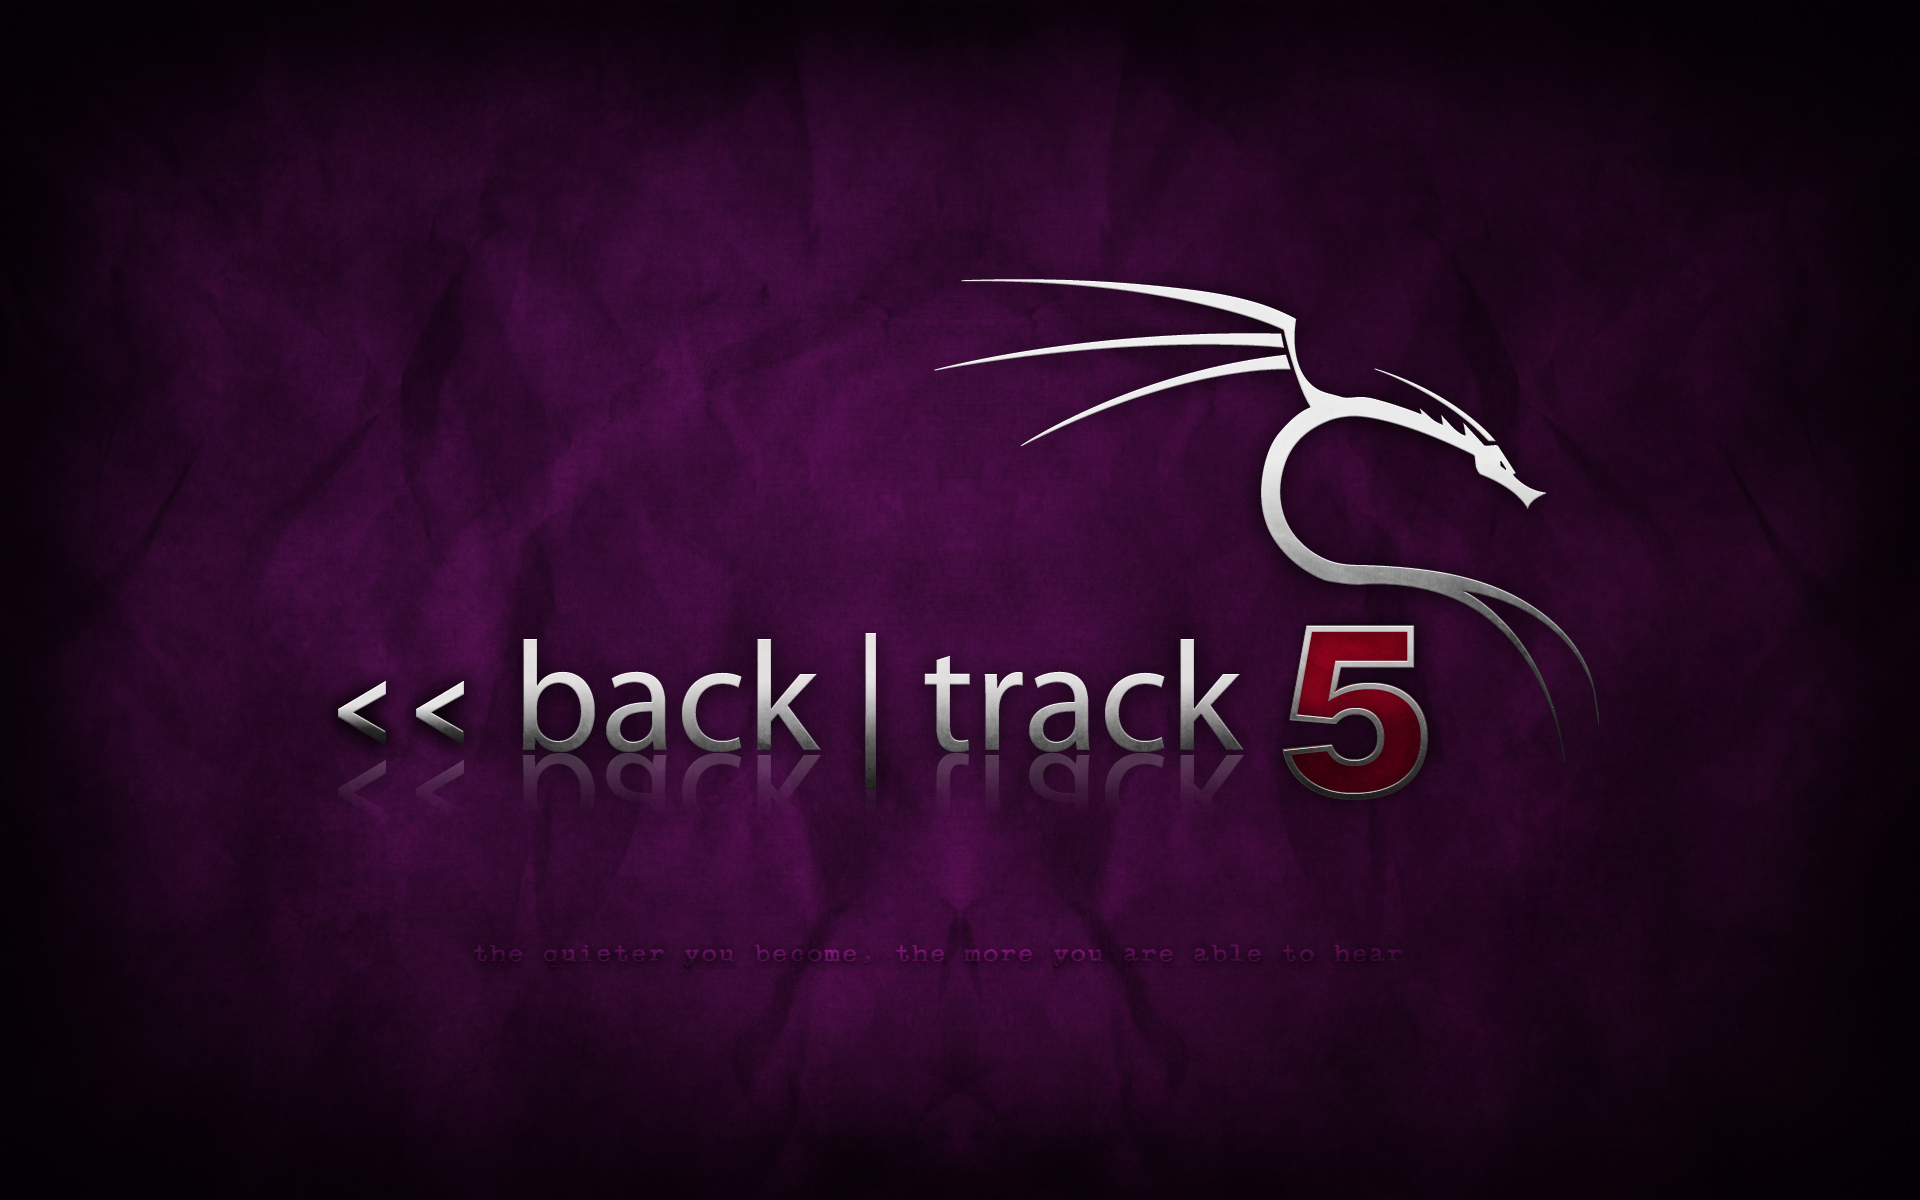 backtrack-5-purple-1.png